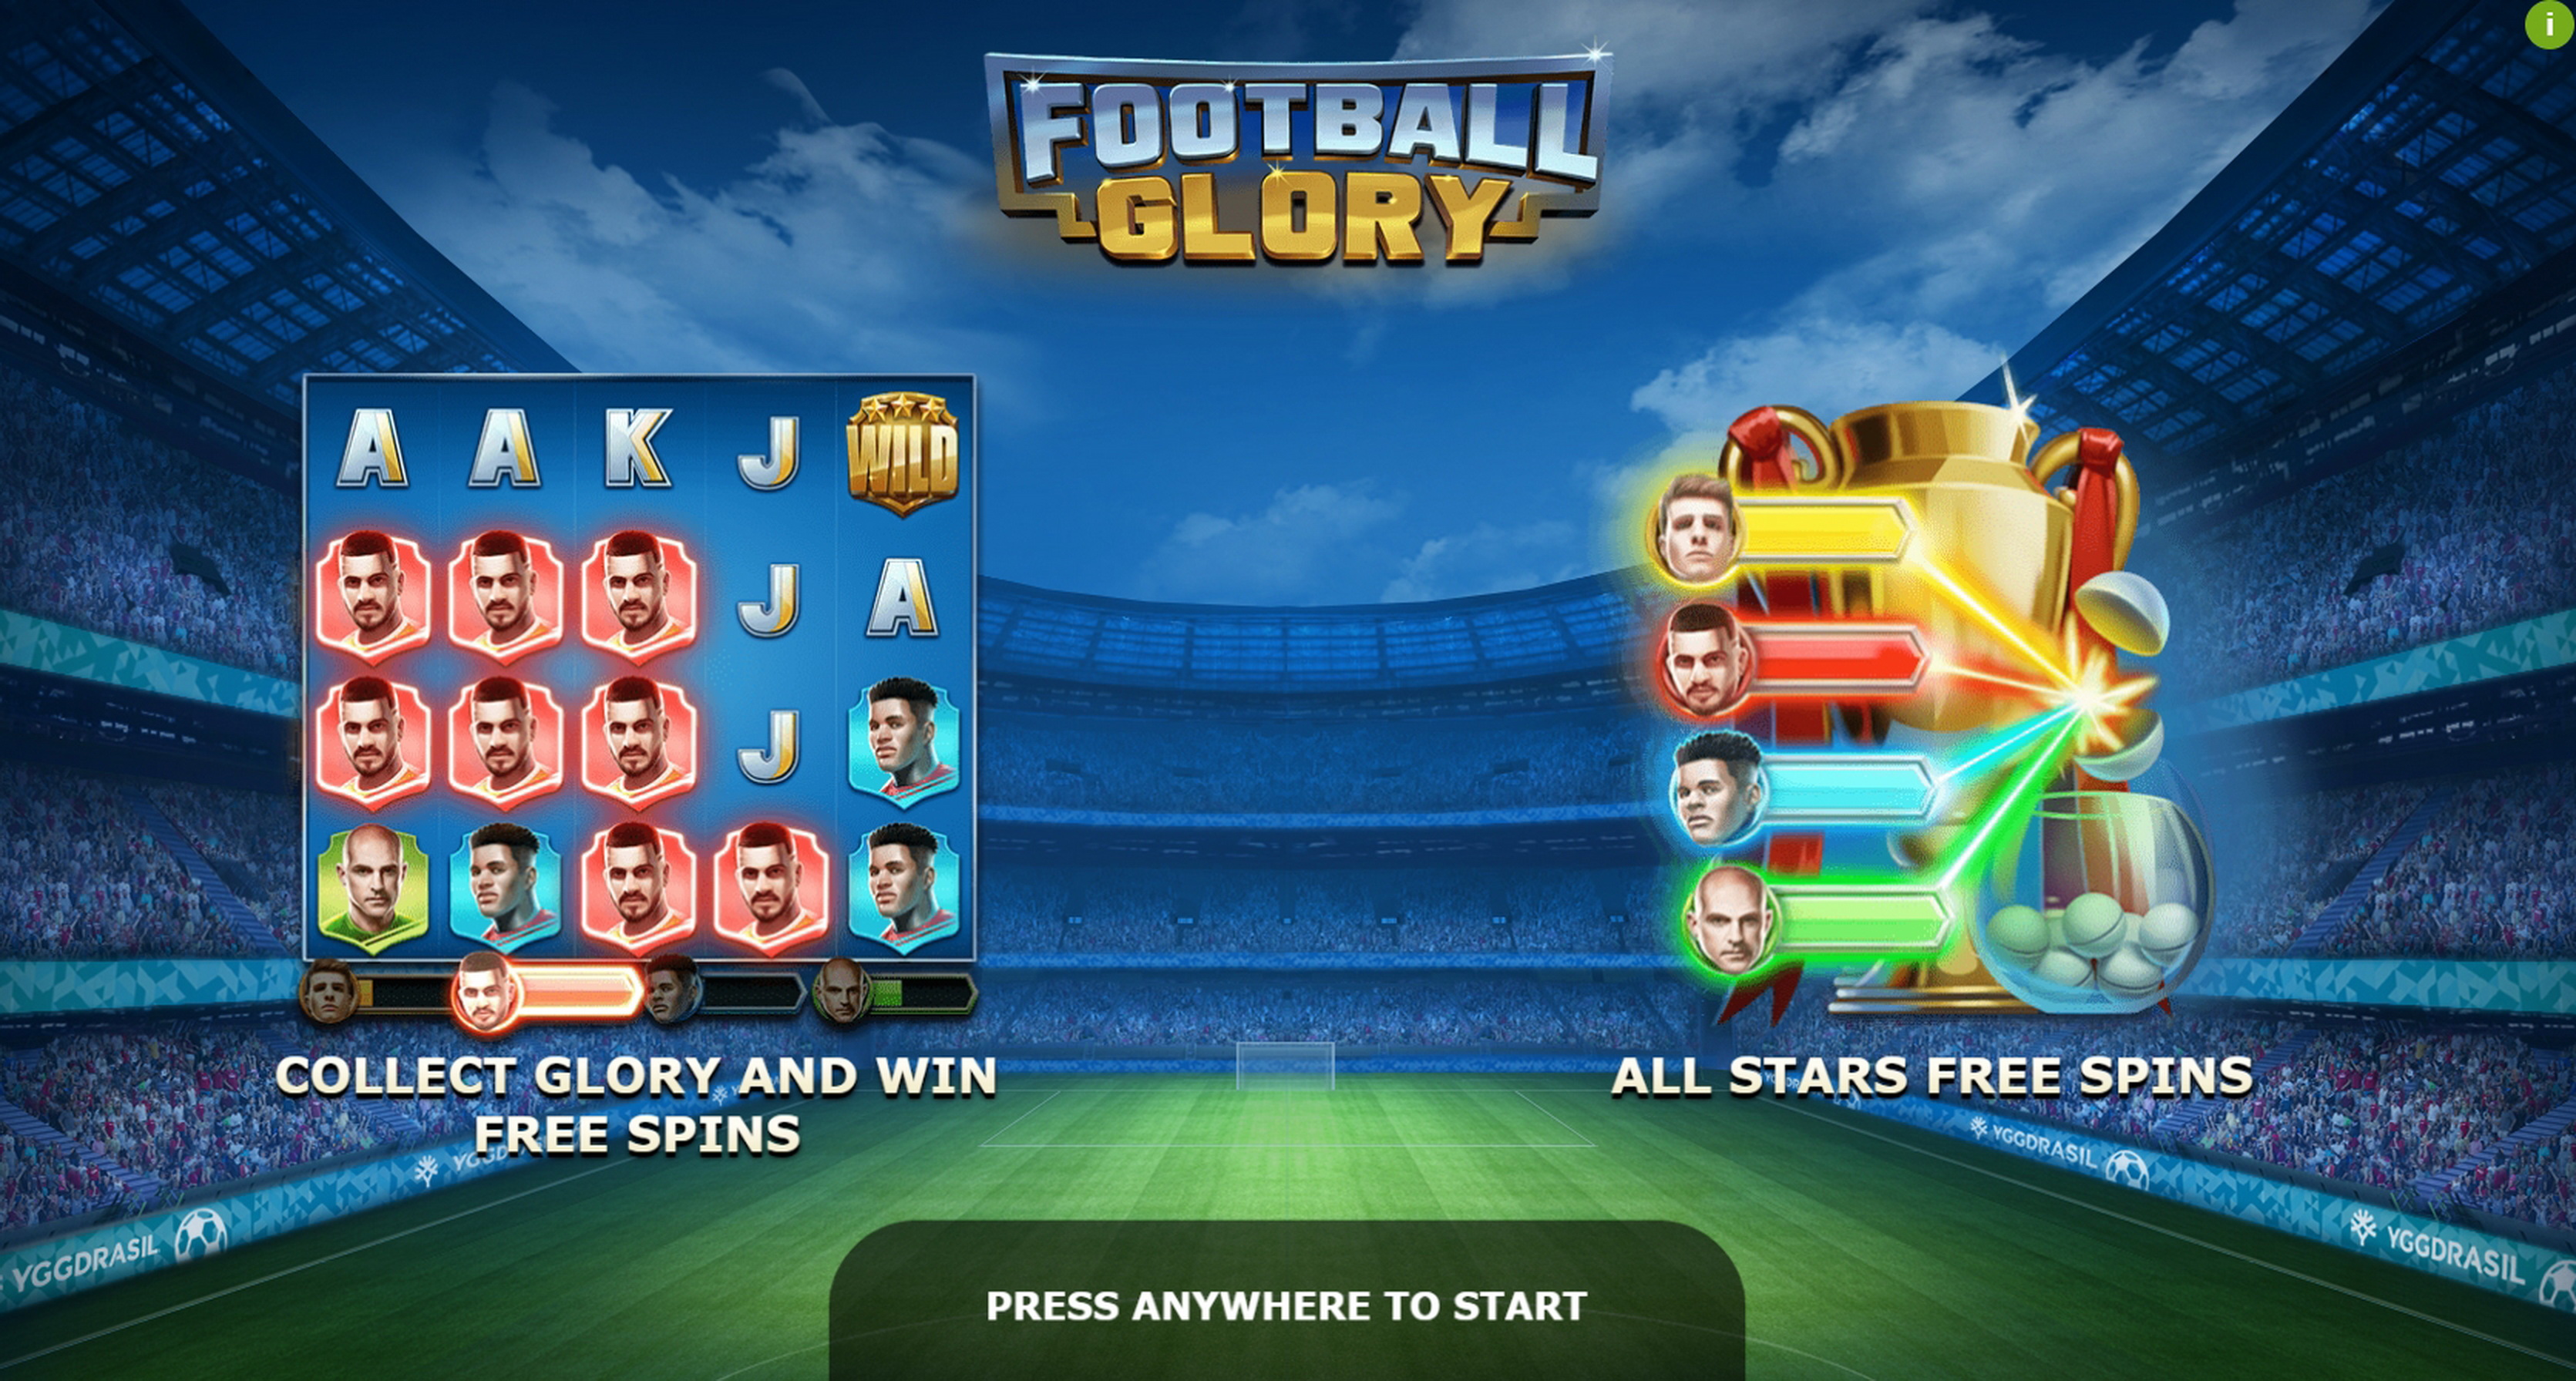 Play Football Glory Free Casino Slot Game by Yggdrasil Gaming